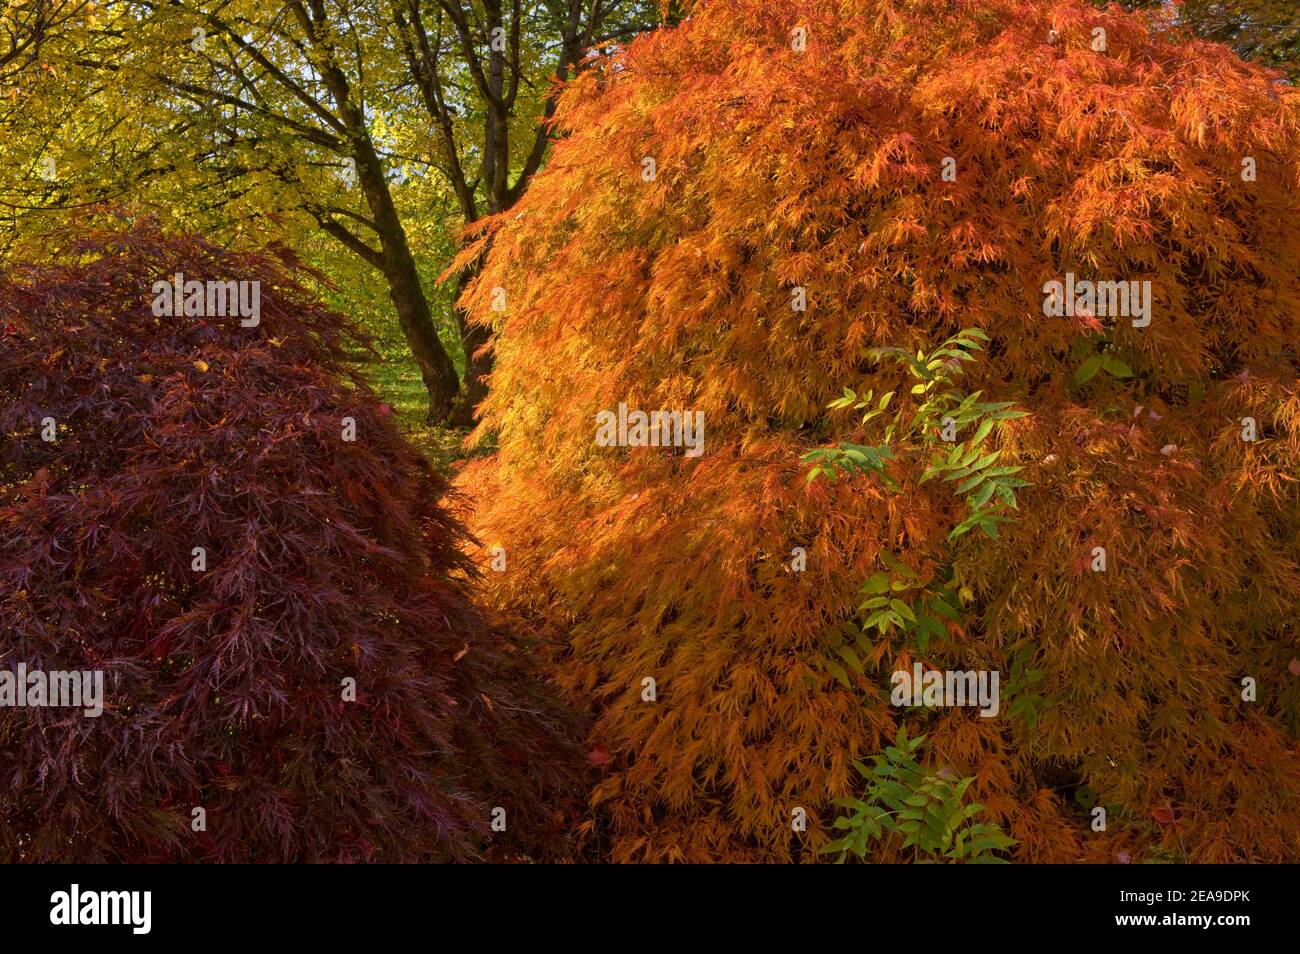 Europe, Germany, Hesse, Marburg, Botanical Garden of the Philipps University on the Lahn Mountains, red maple (Acer palmatum ornatum) in autumn leaves Stock Photo